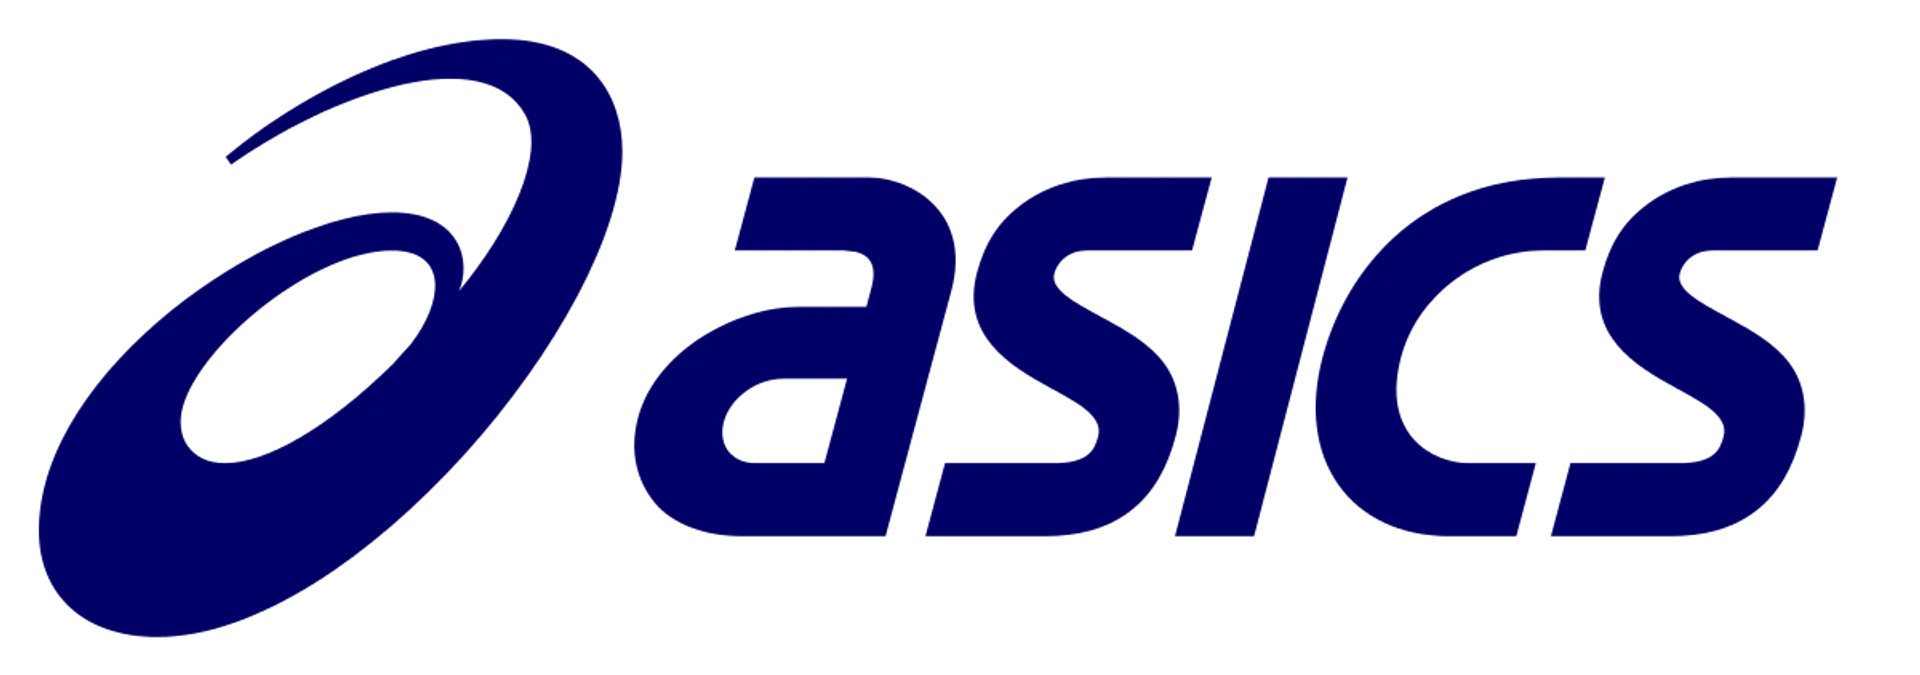 ASICS logo